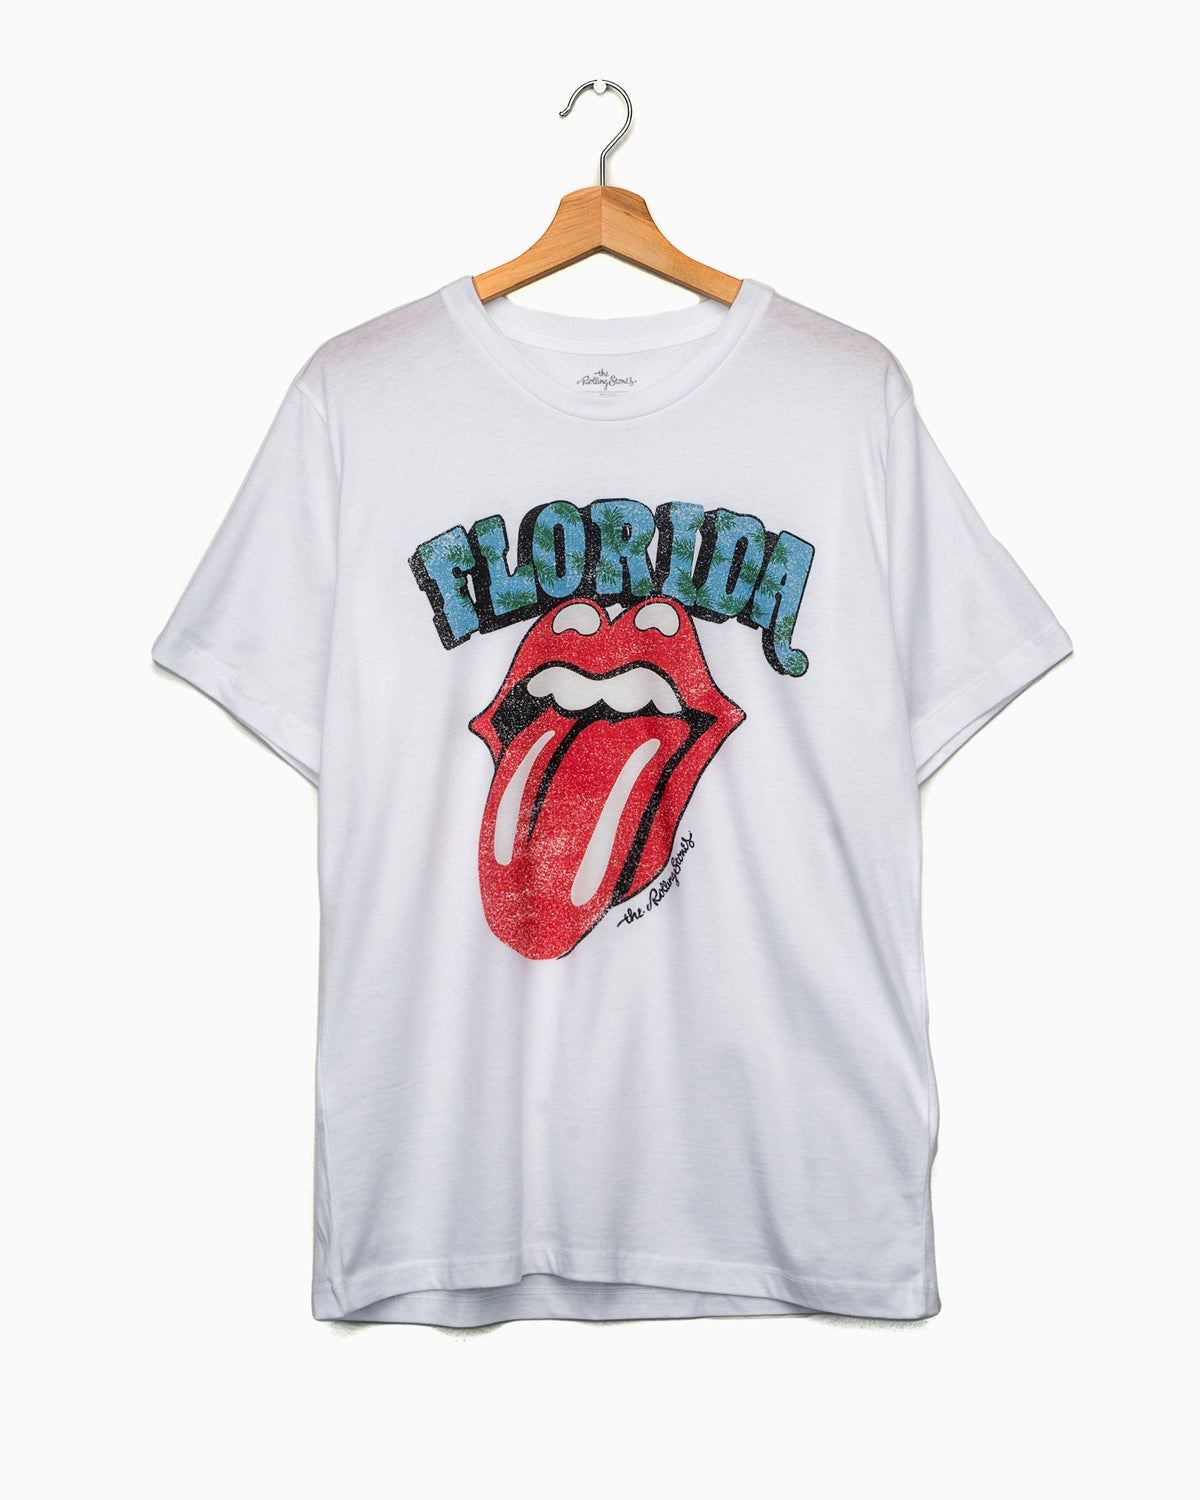 Rolling Stones Florida Flag Rocker White Tee (4513498529895)